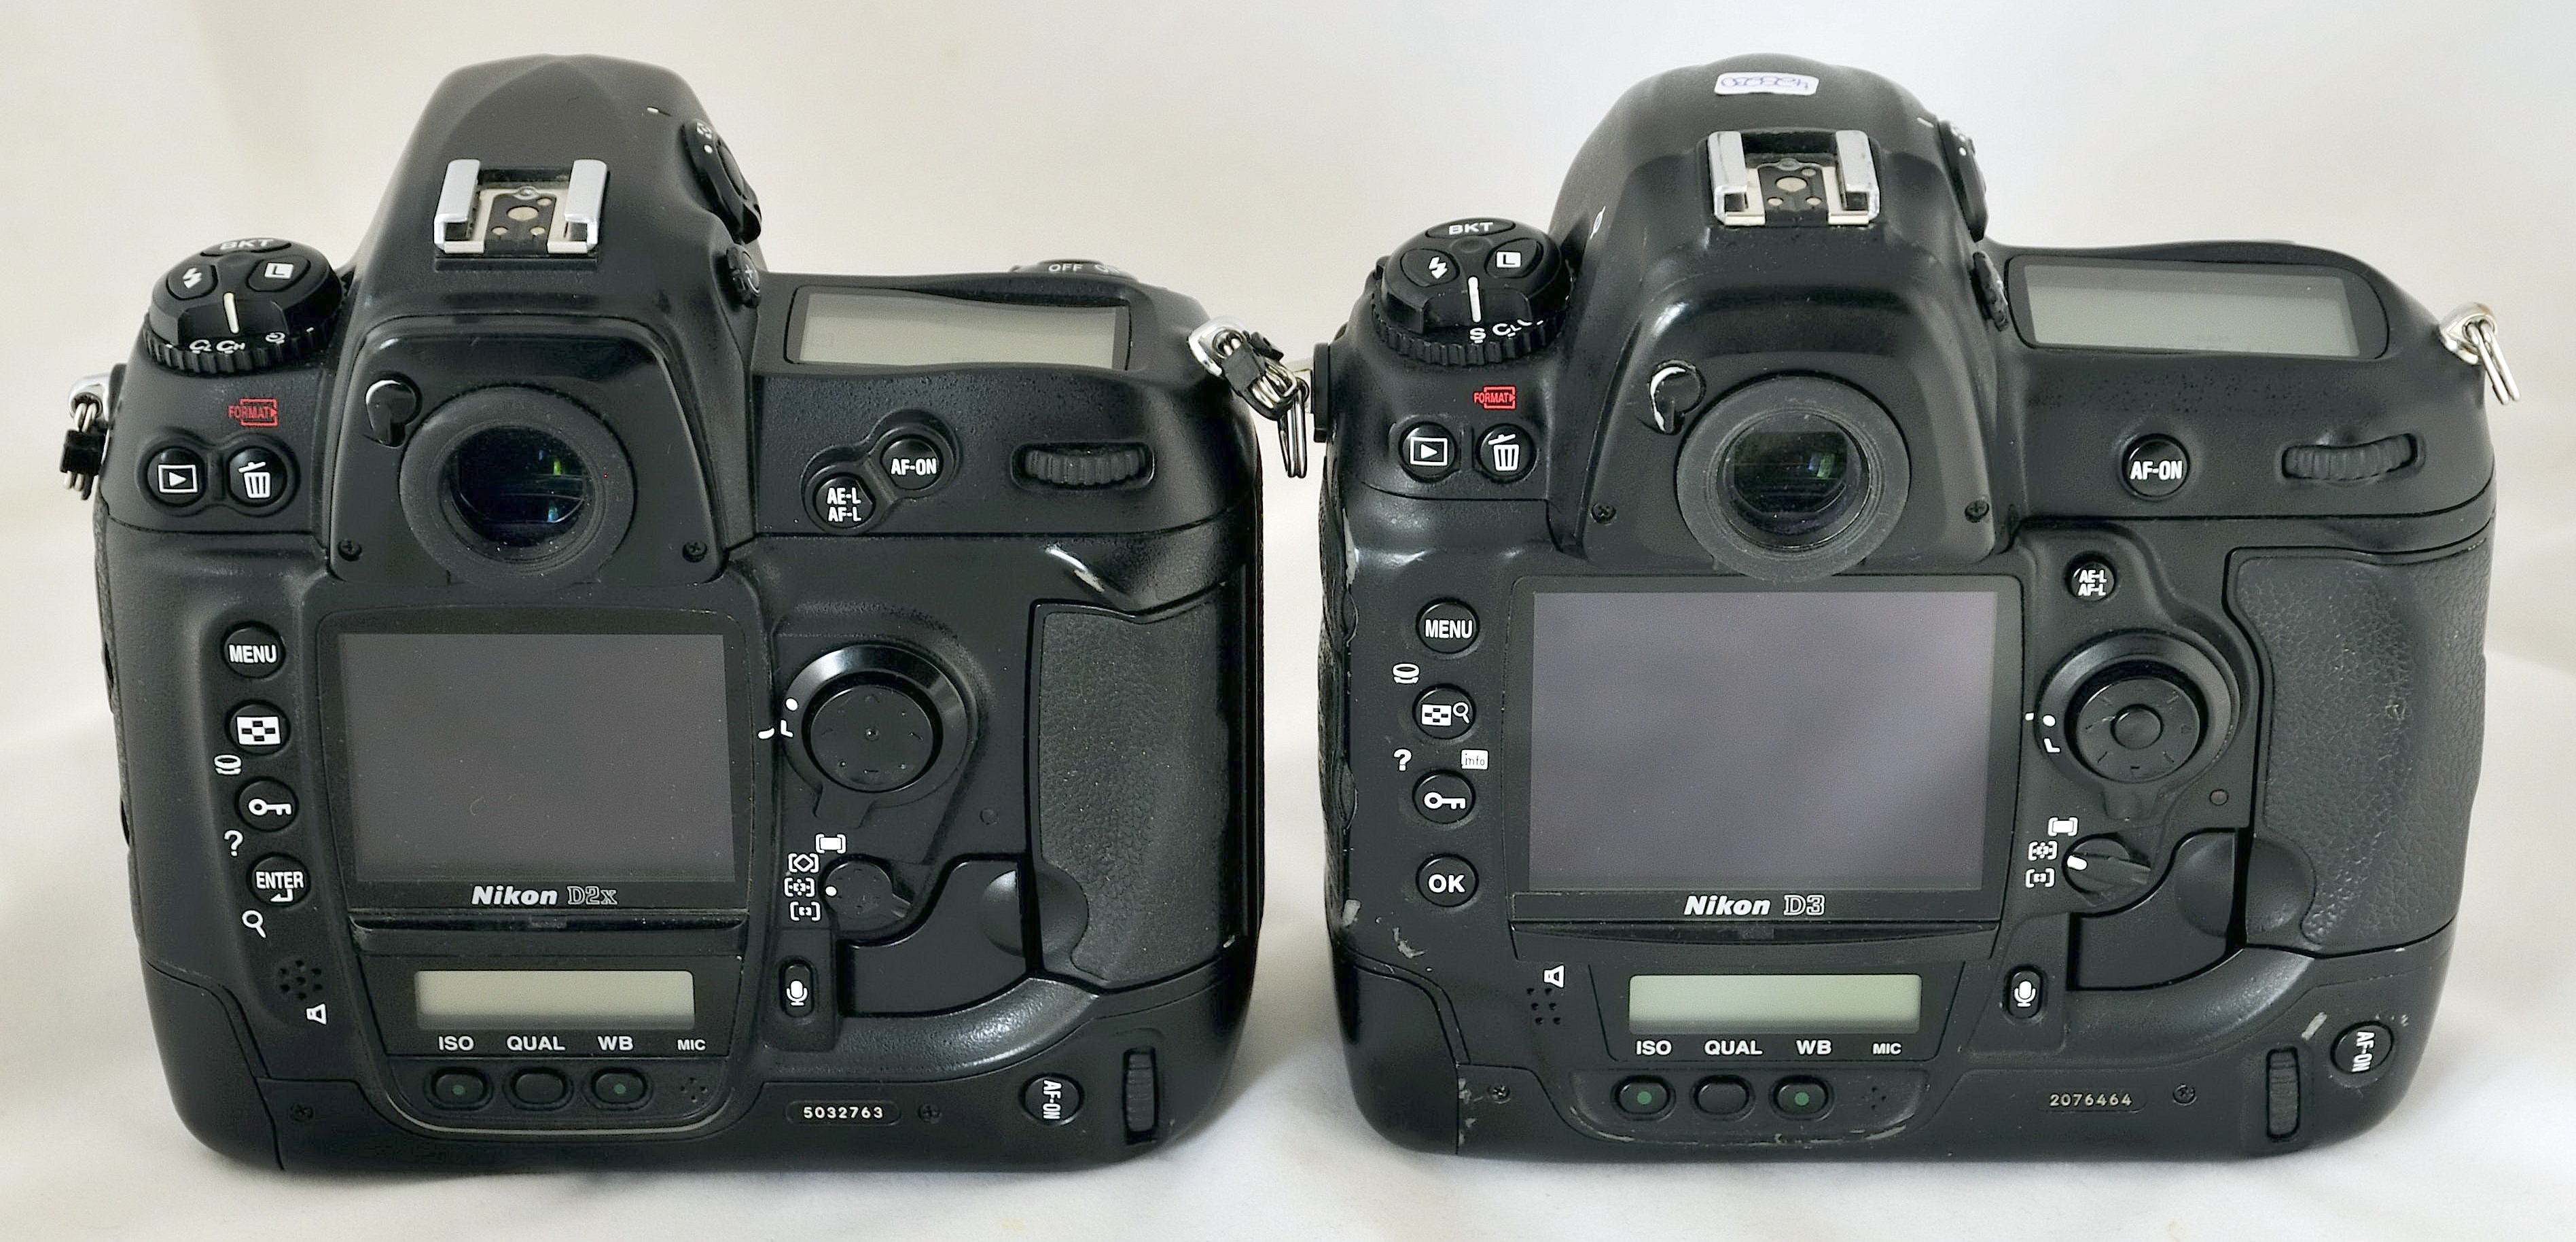 Nikon D3 series